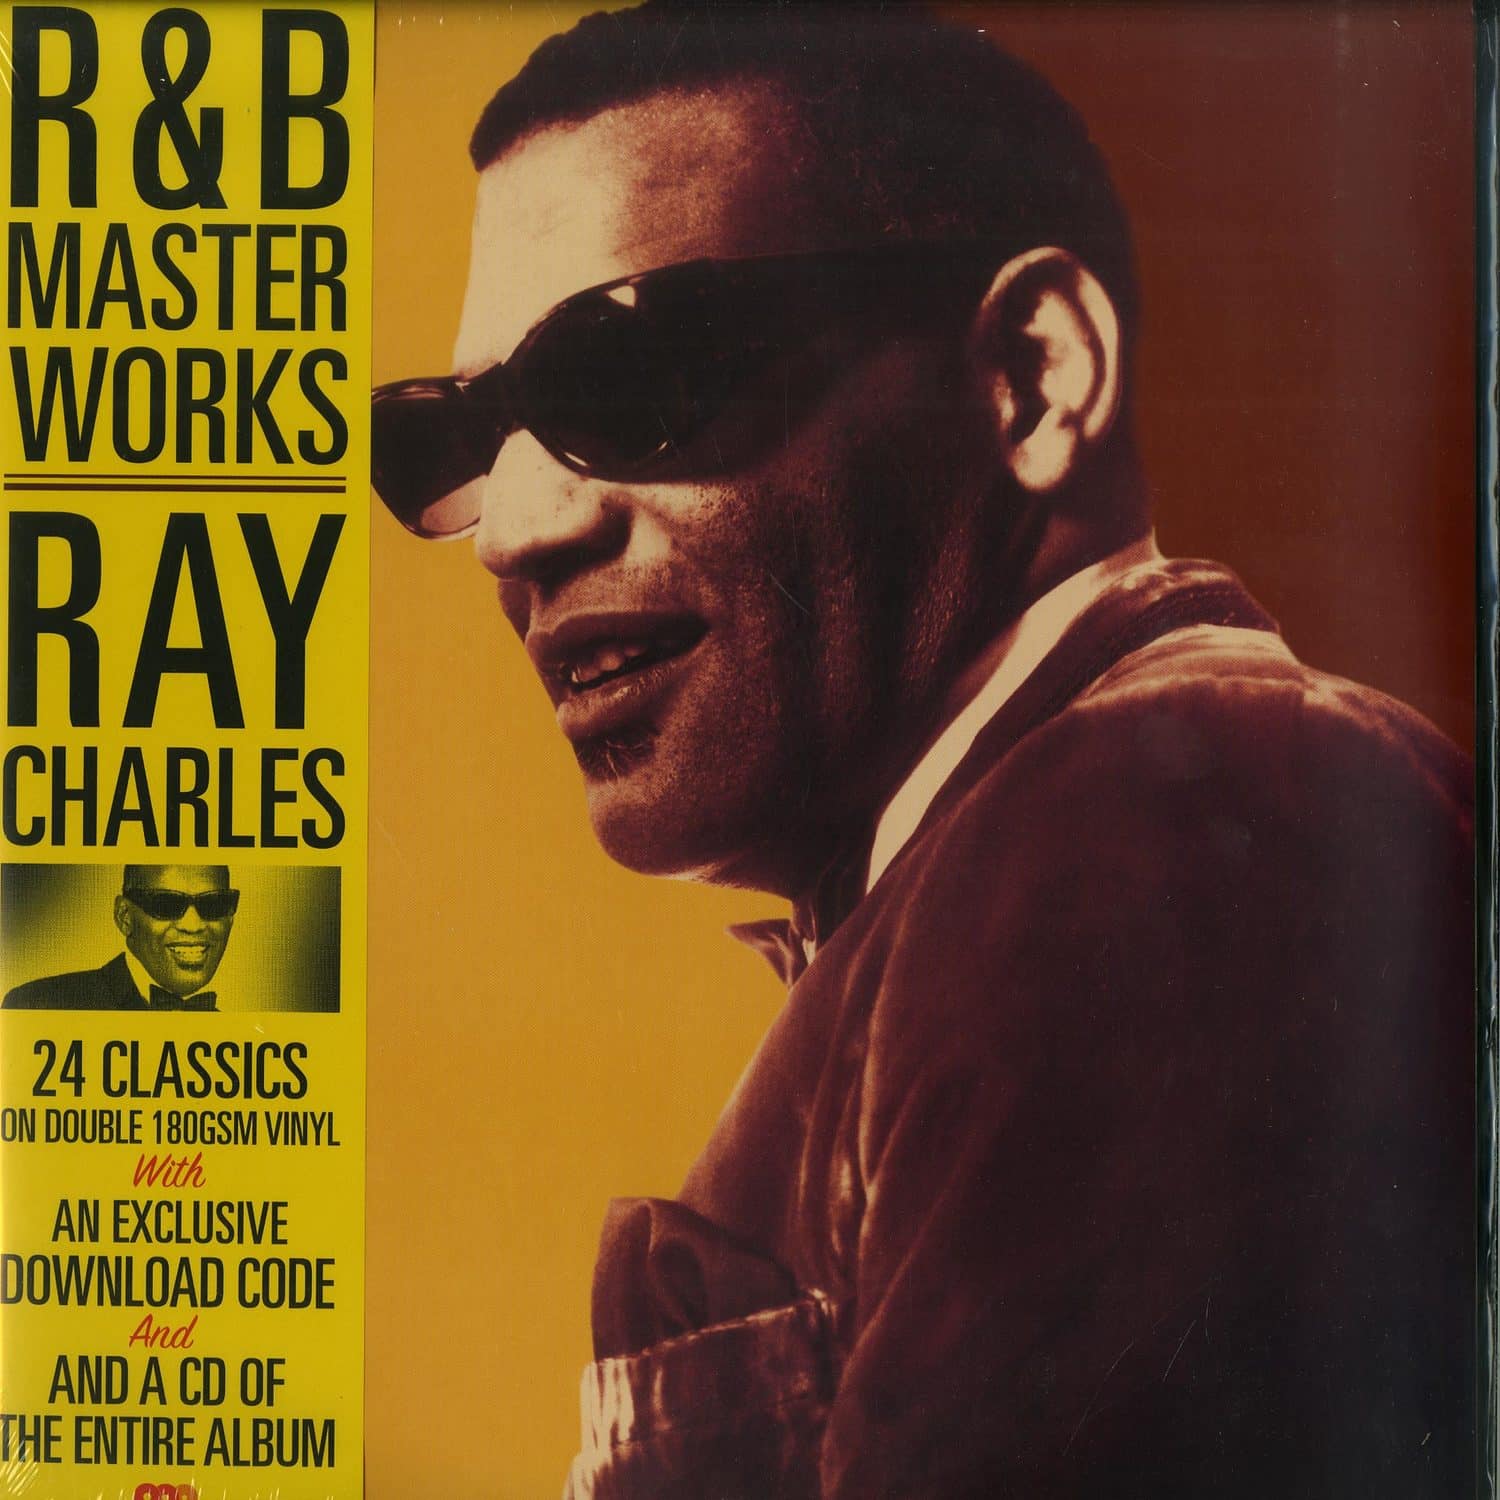 Ray Charles - R&B MASTER WORKS 